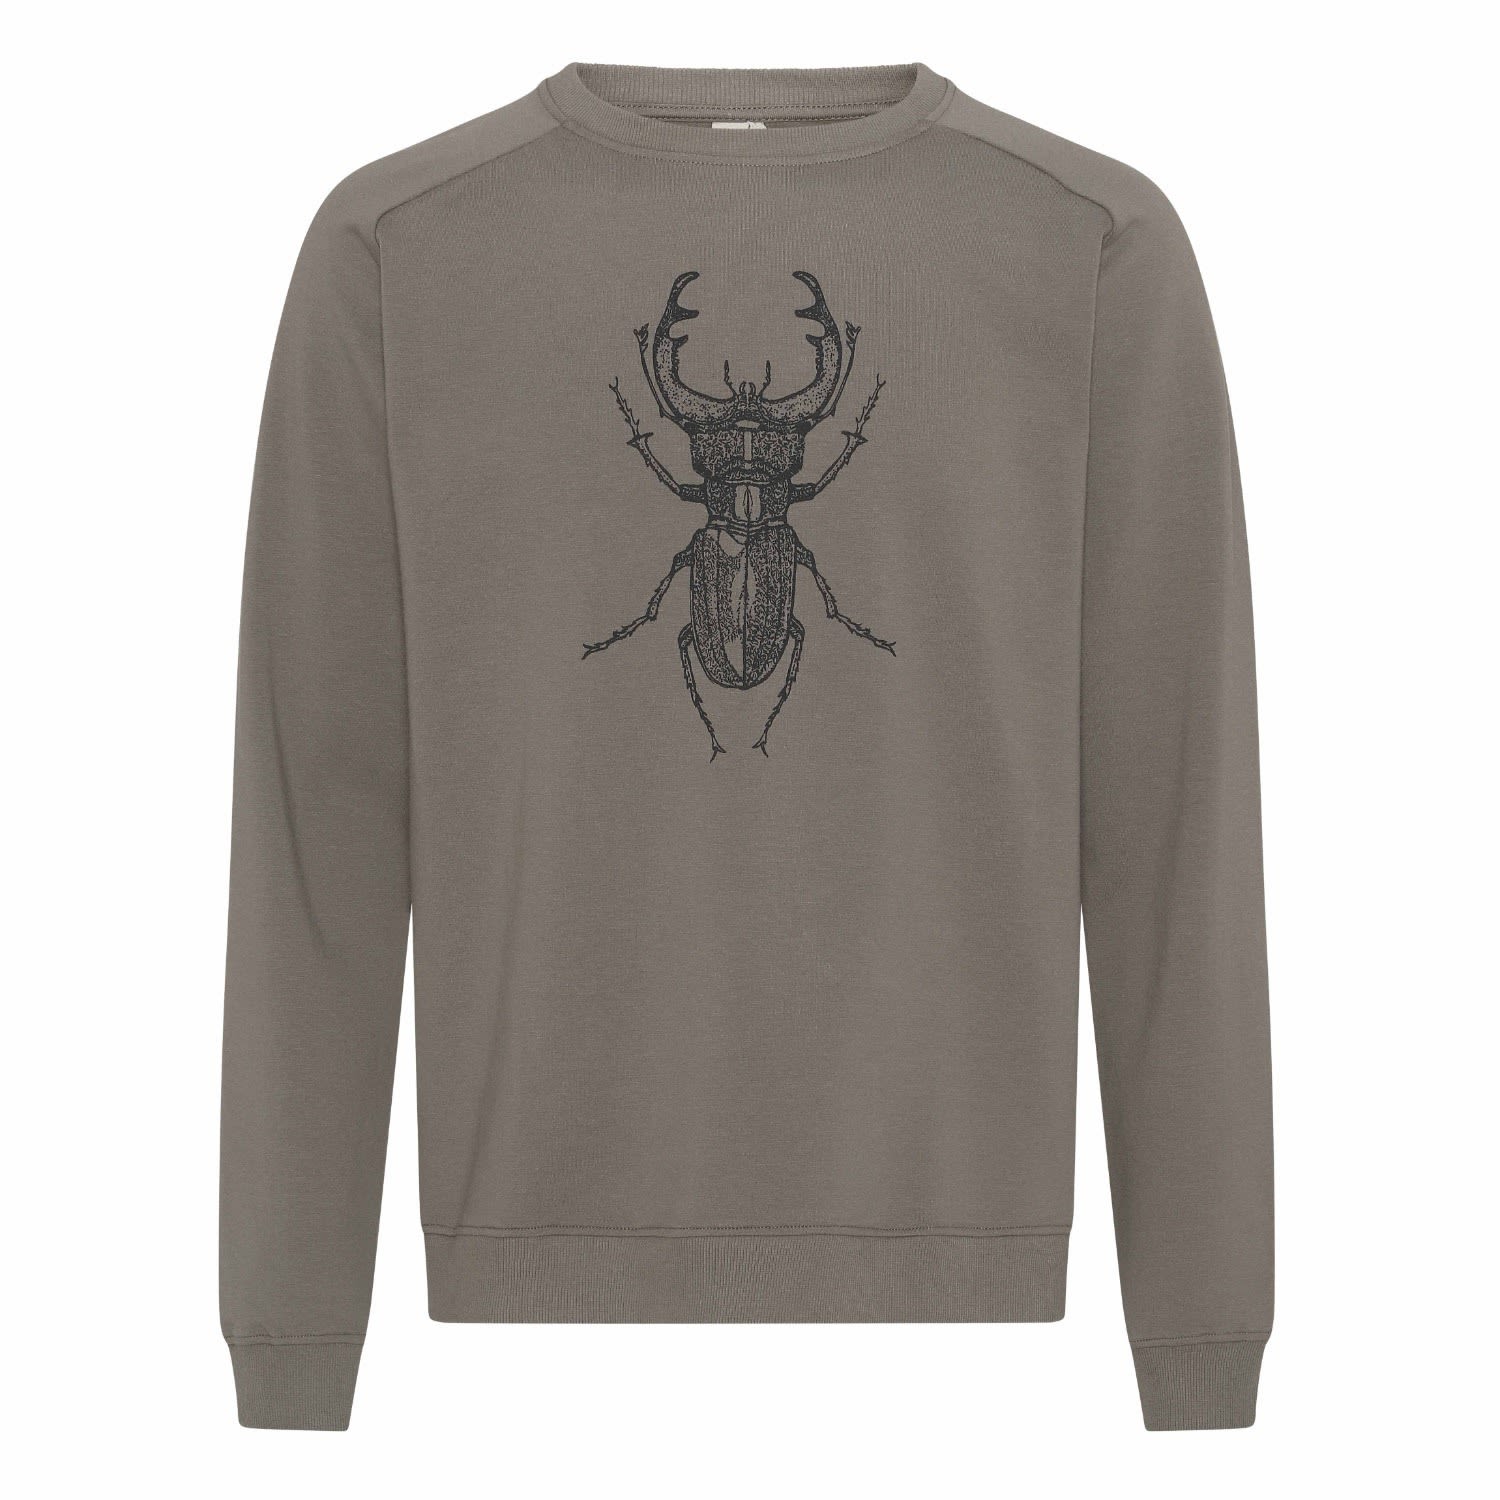 Men's Brown The Organic Sweatshirt - Stag Beetle Small GROBUND